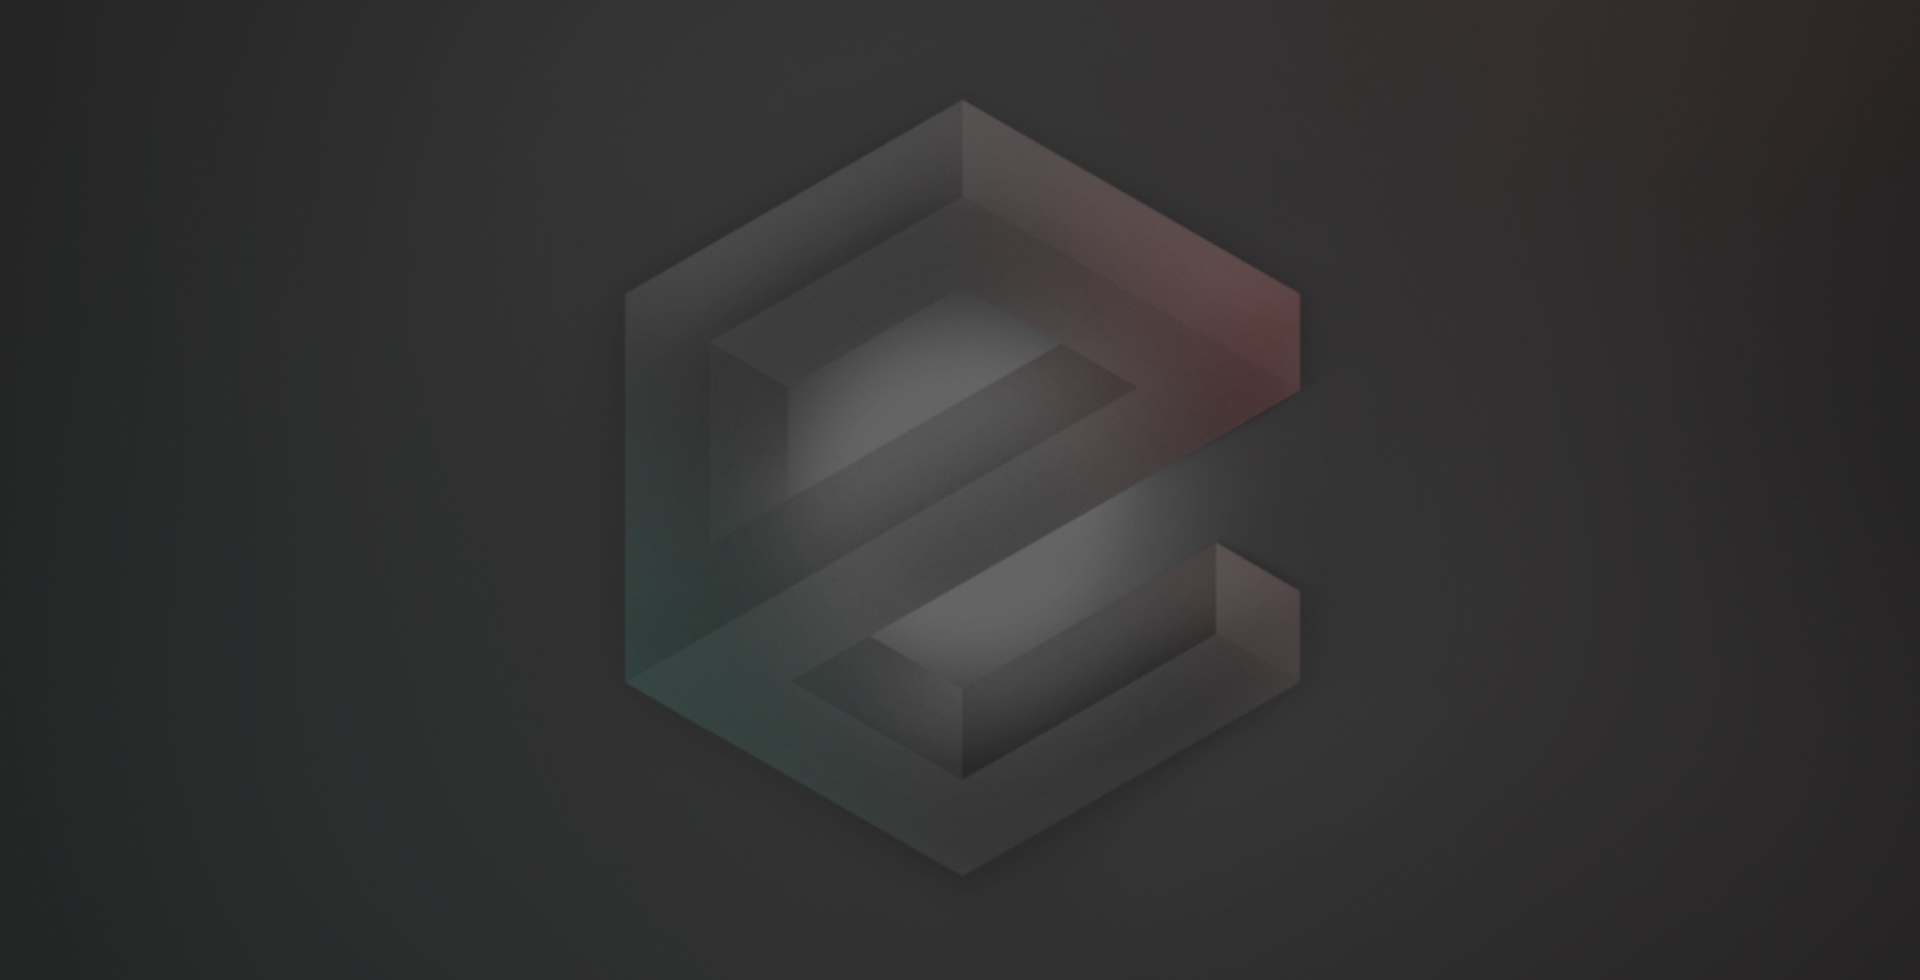 Eberus logo on a grey background